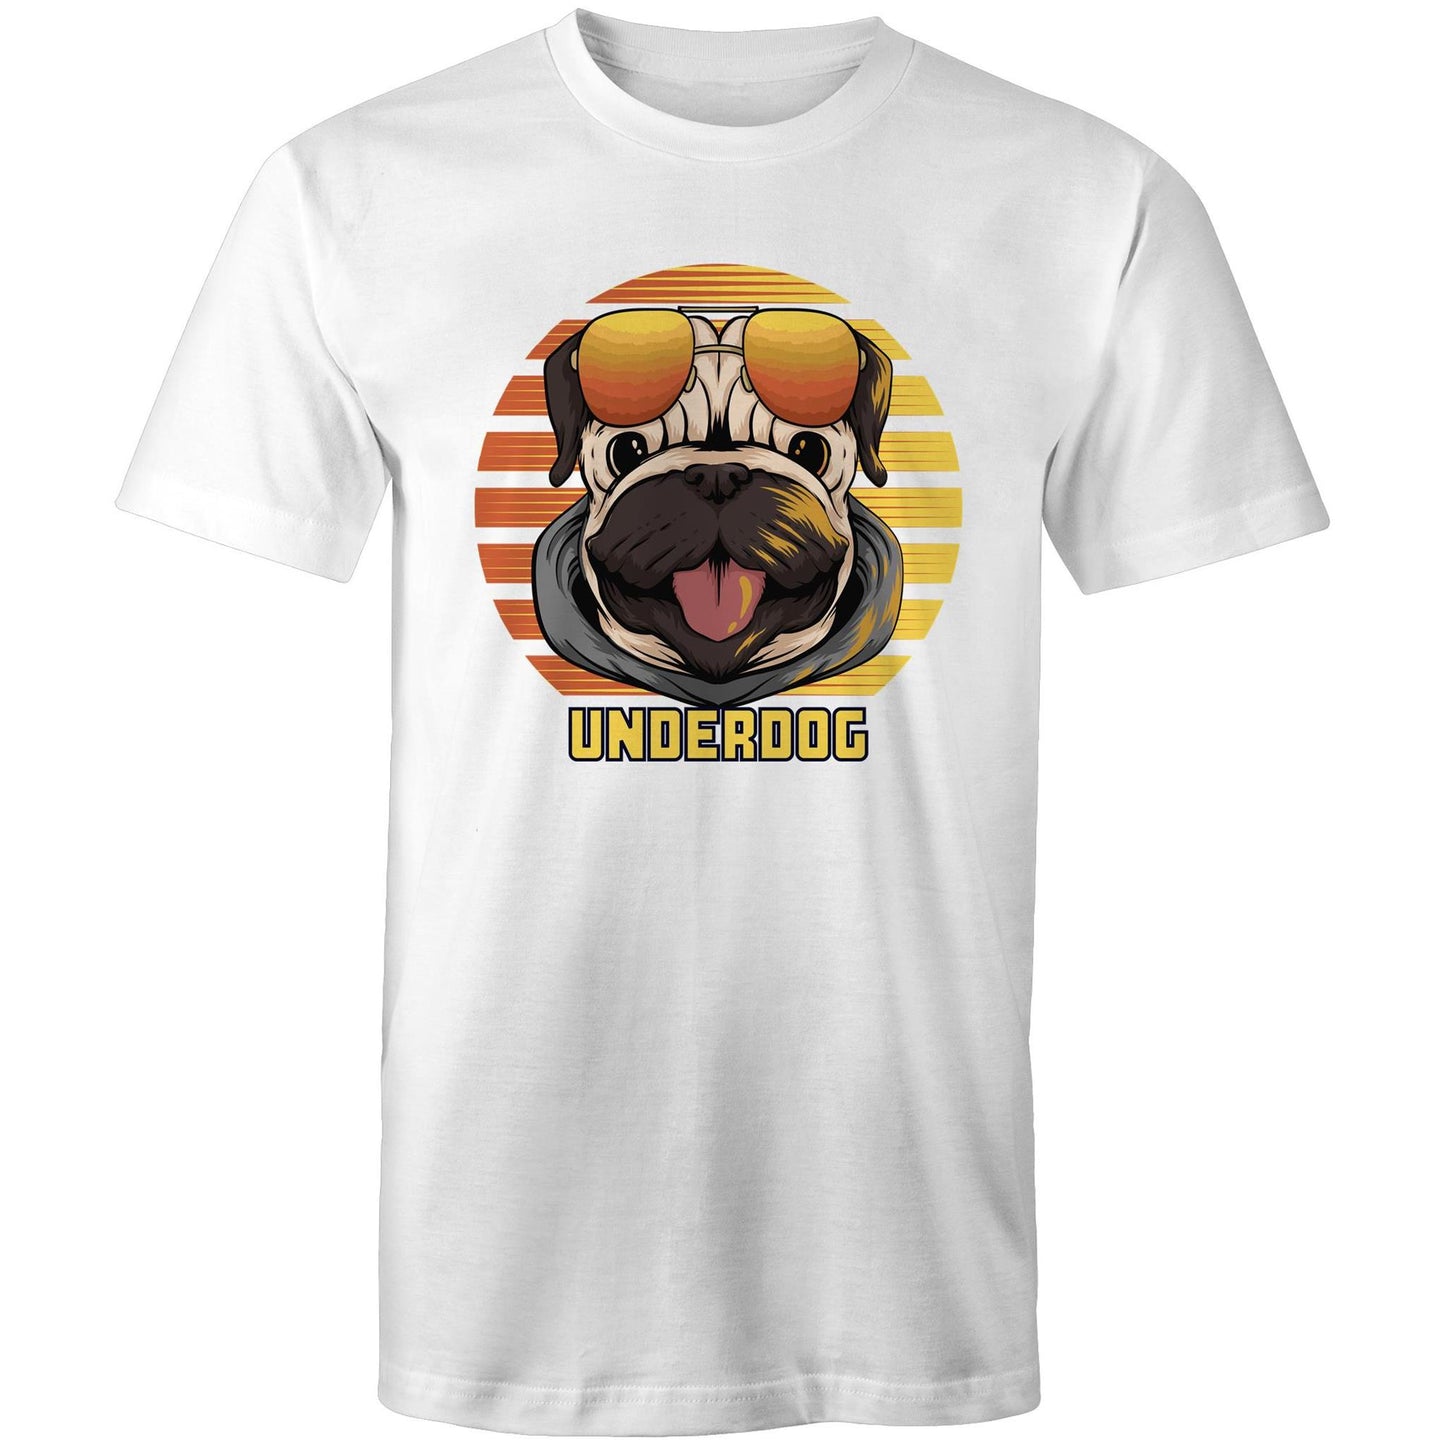 Underdog - Mens T-Shirt White Mens T-shirt animal